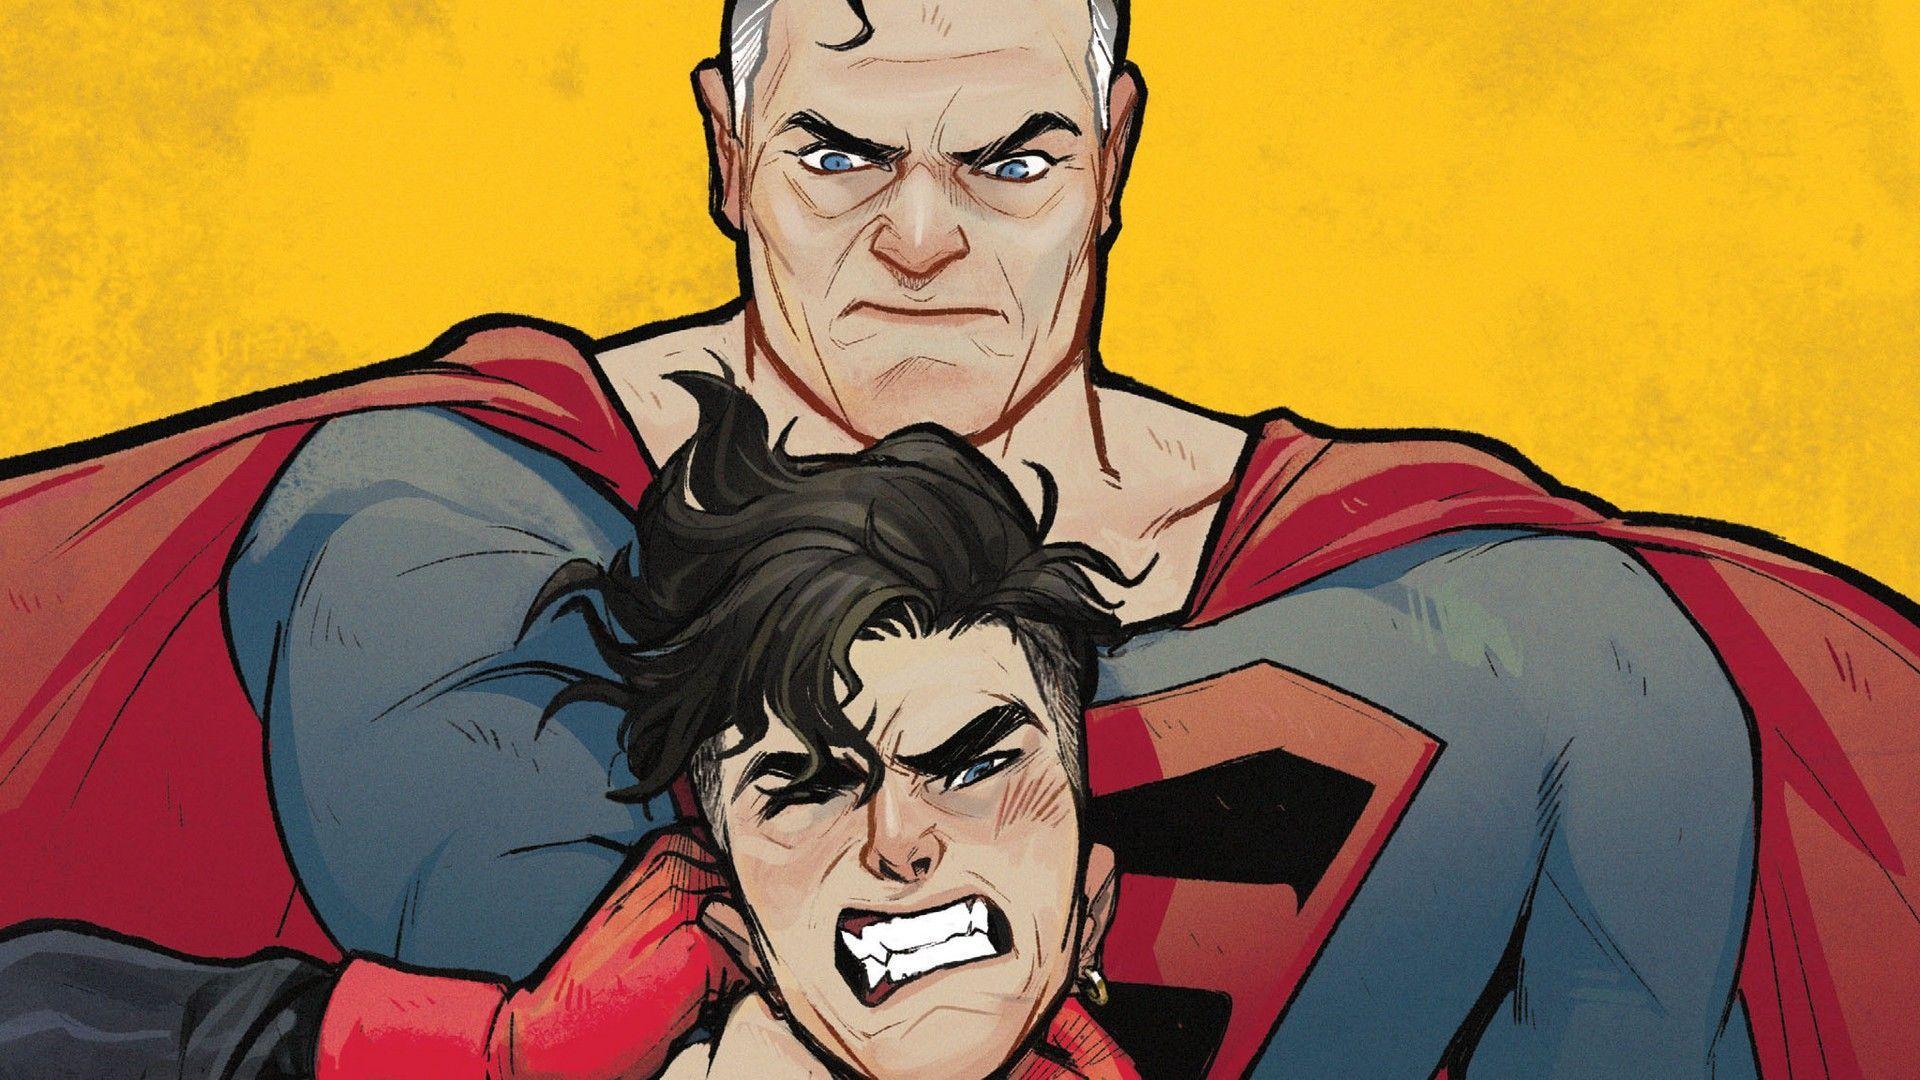 Superboy wallpaper. DC Universe wallpaper. Wallpaper